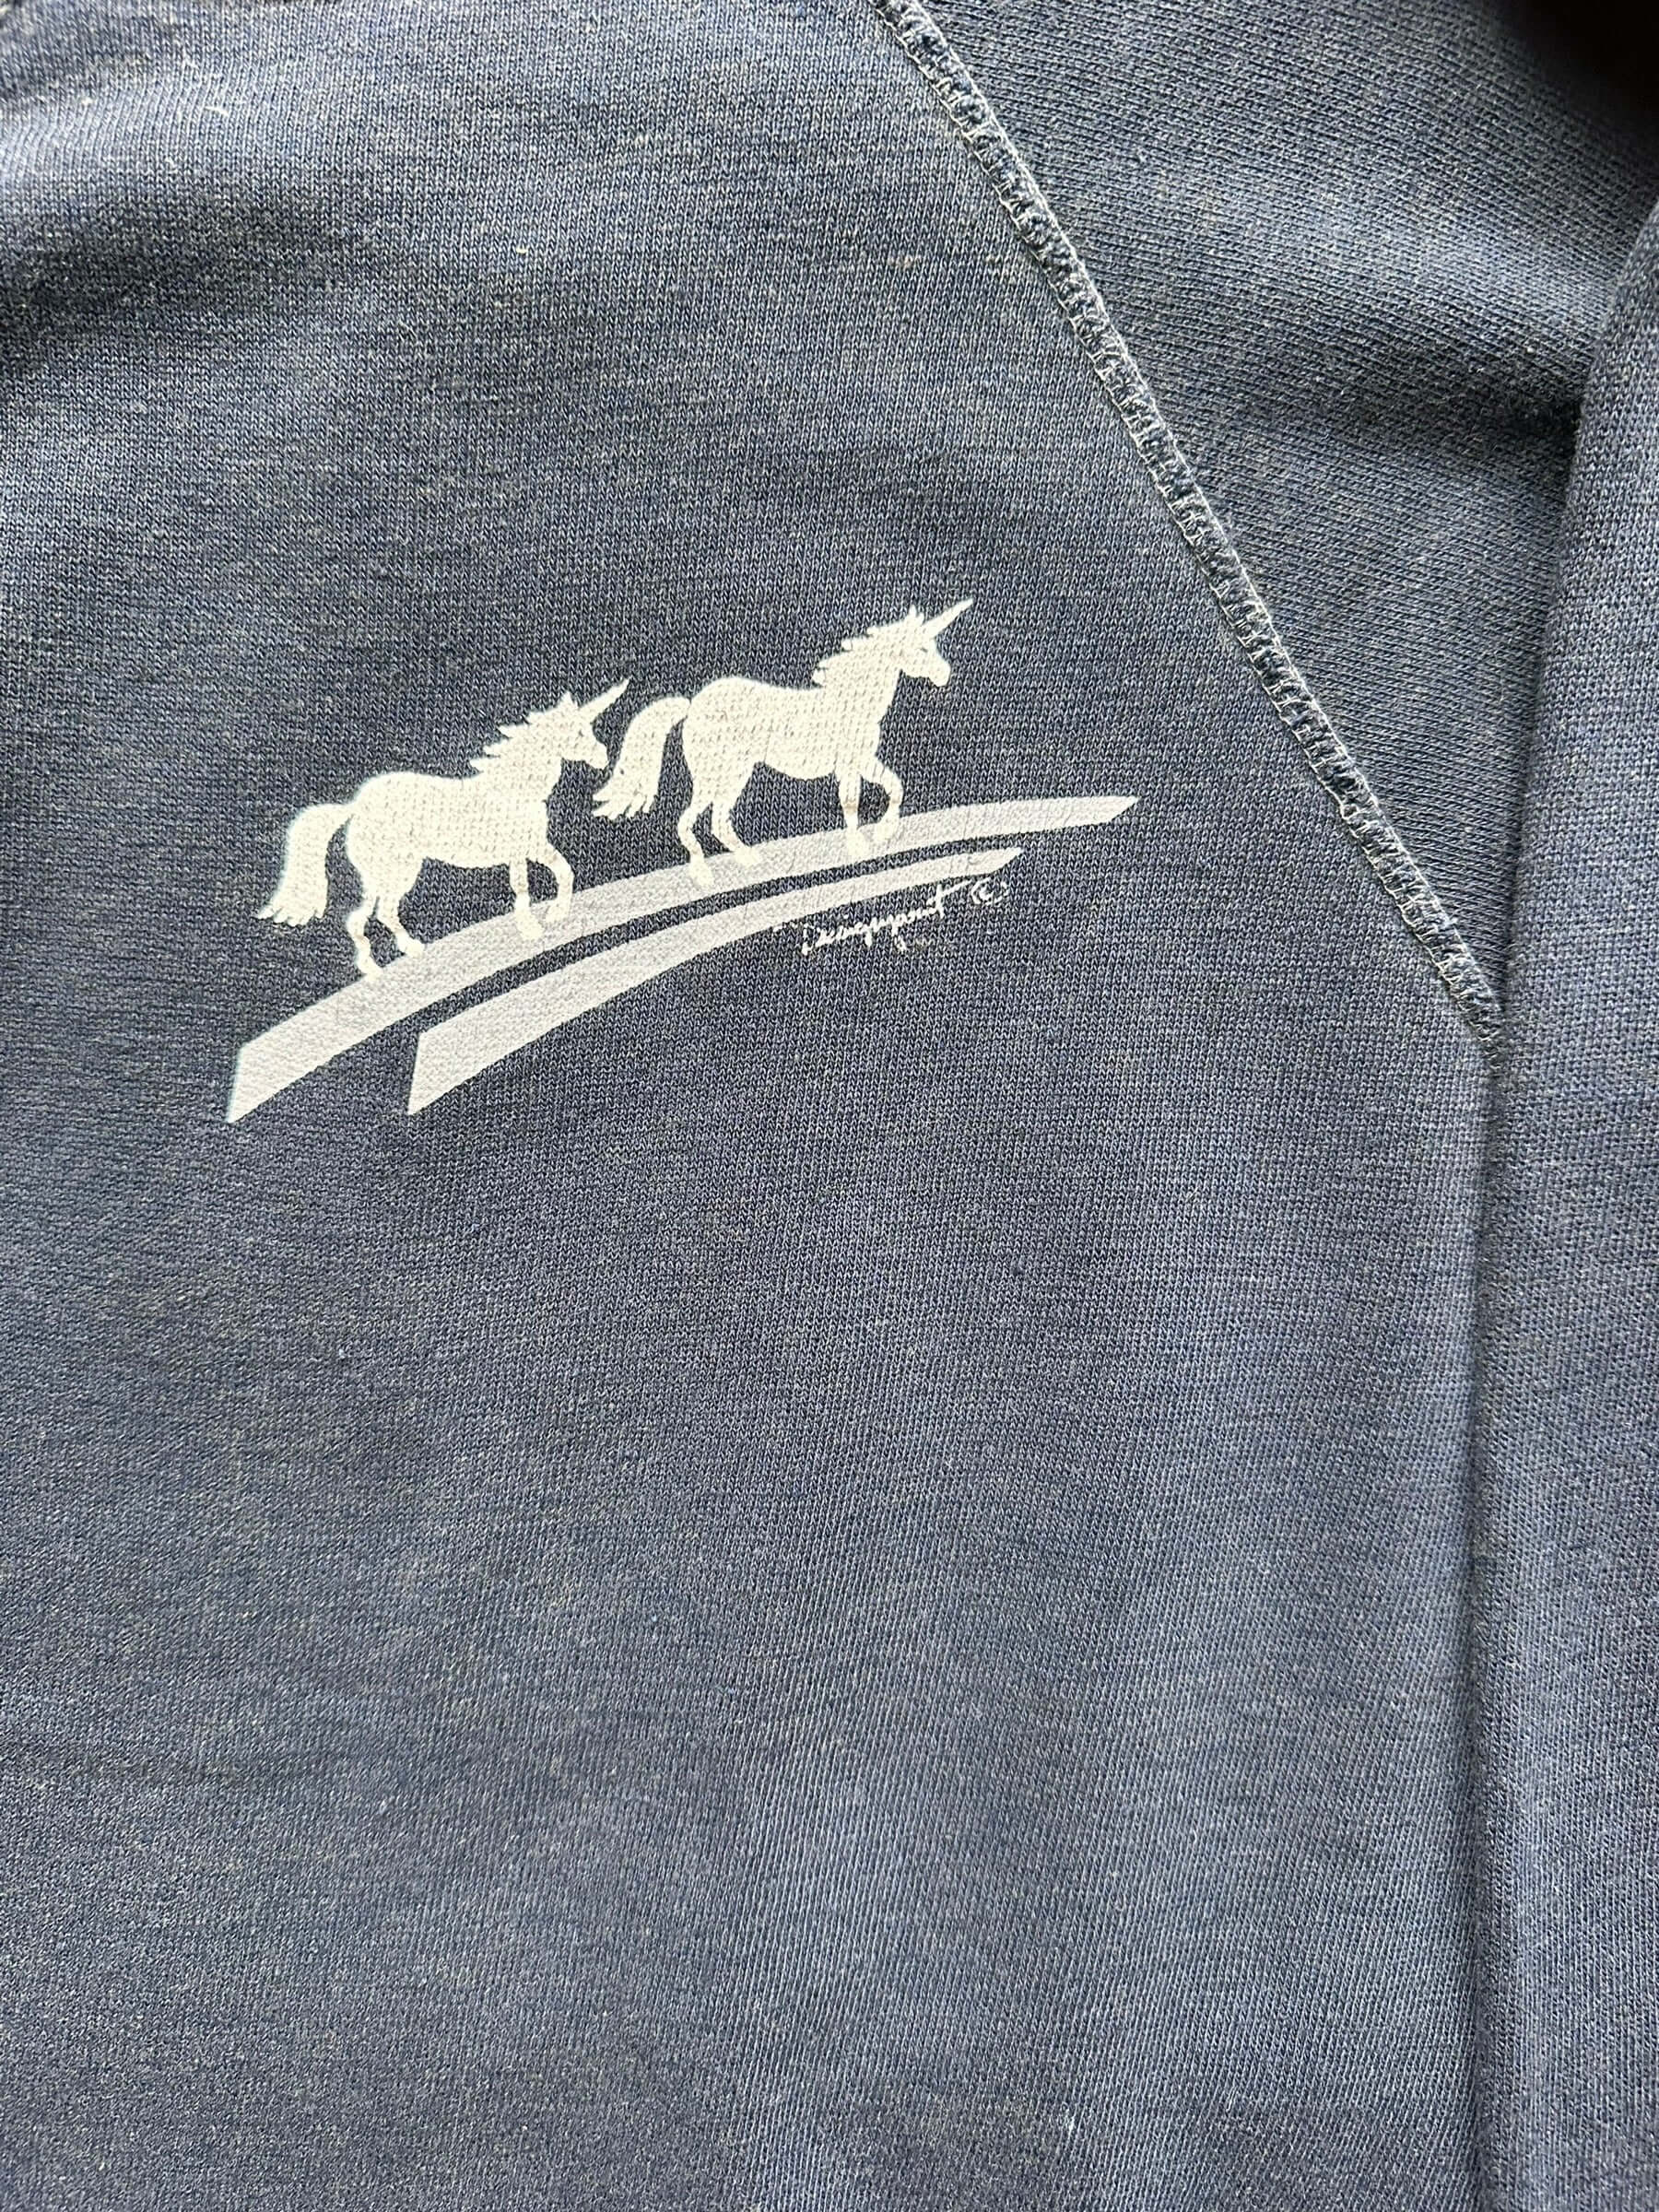 Double Unicorn Graphic Close Up on Vintage Double Unicorn Crewneck SZ M | Vintage Sweatshirt Seattle